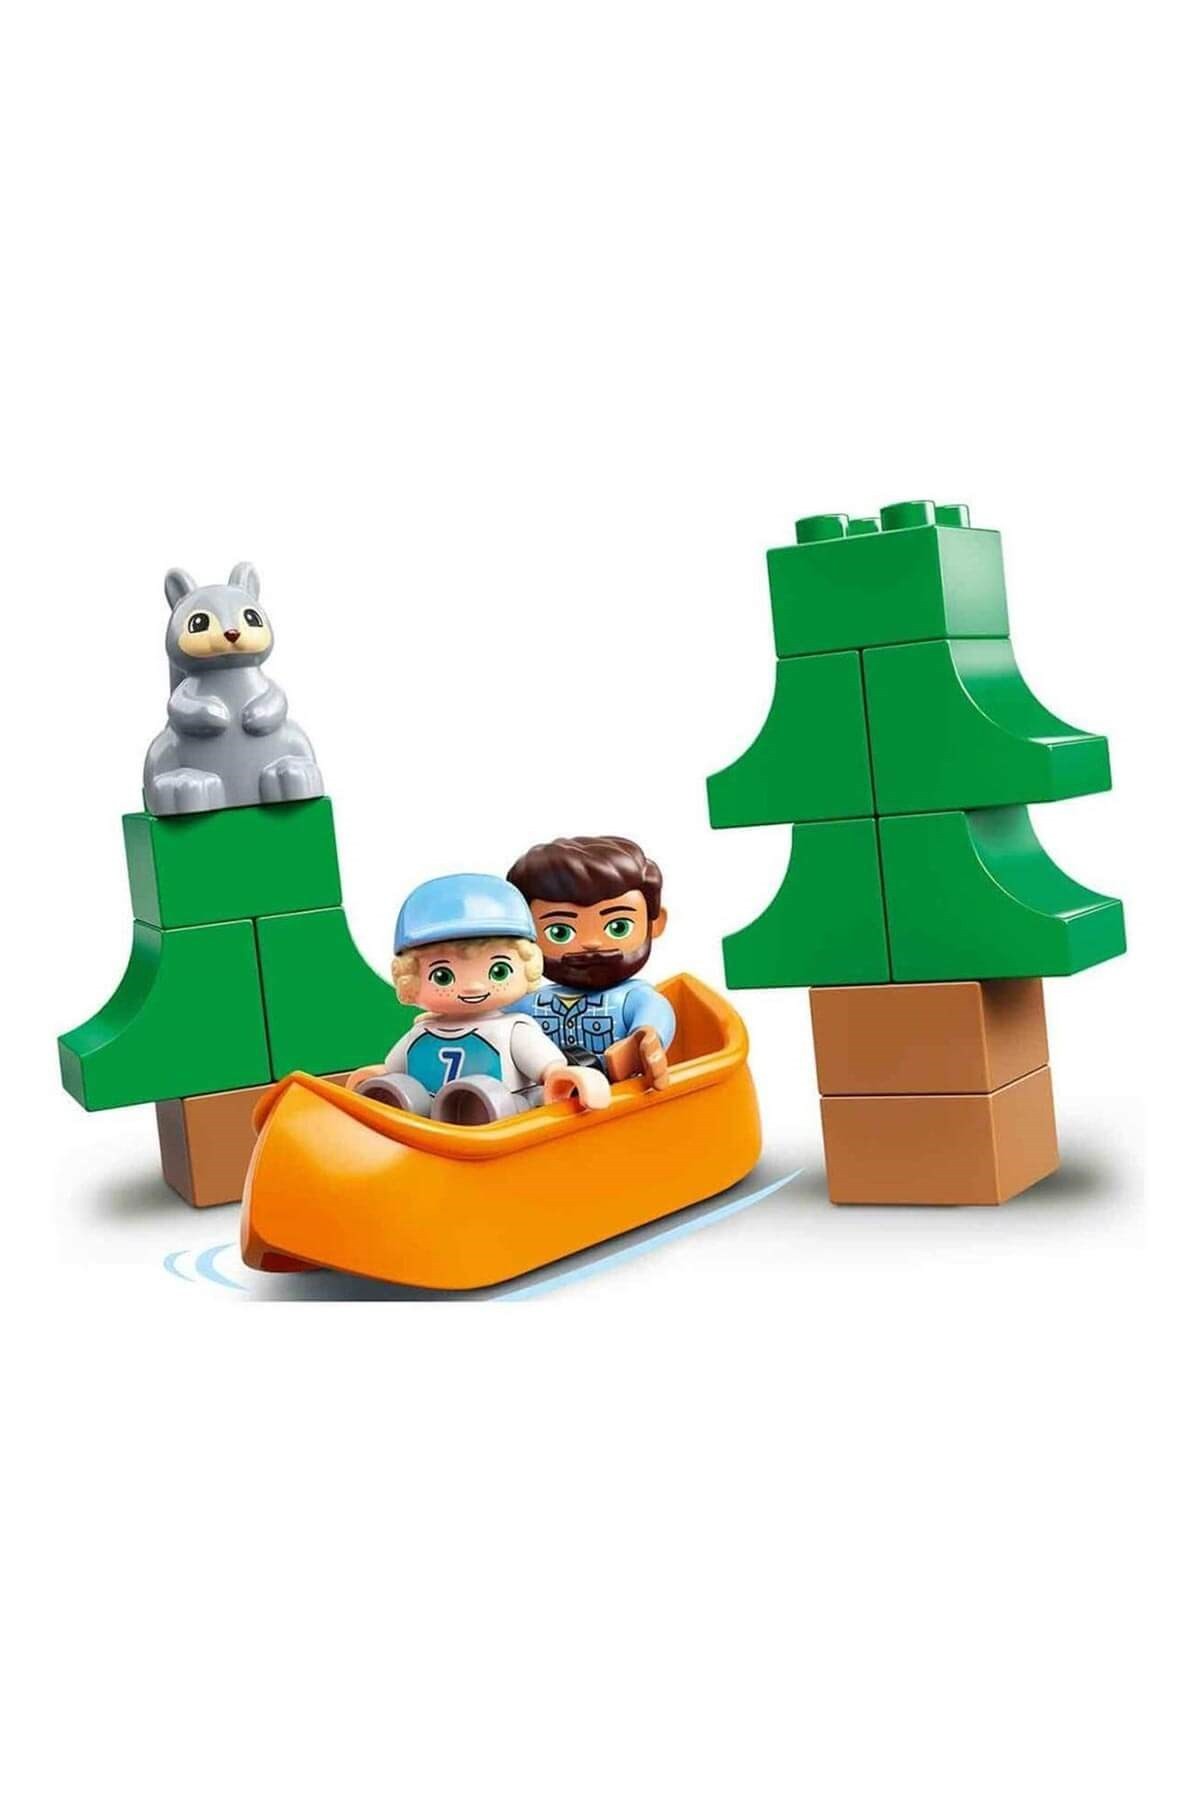 Lego Duplo Family Camping Van Adventure